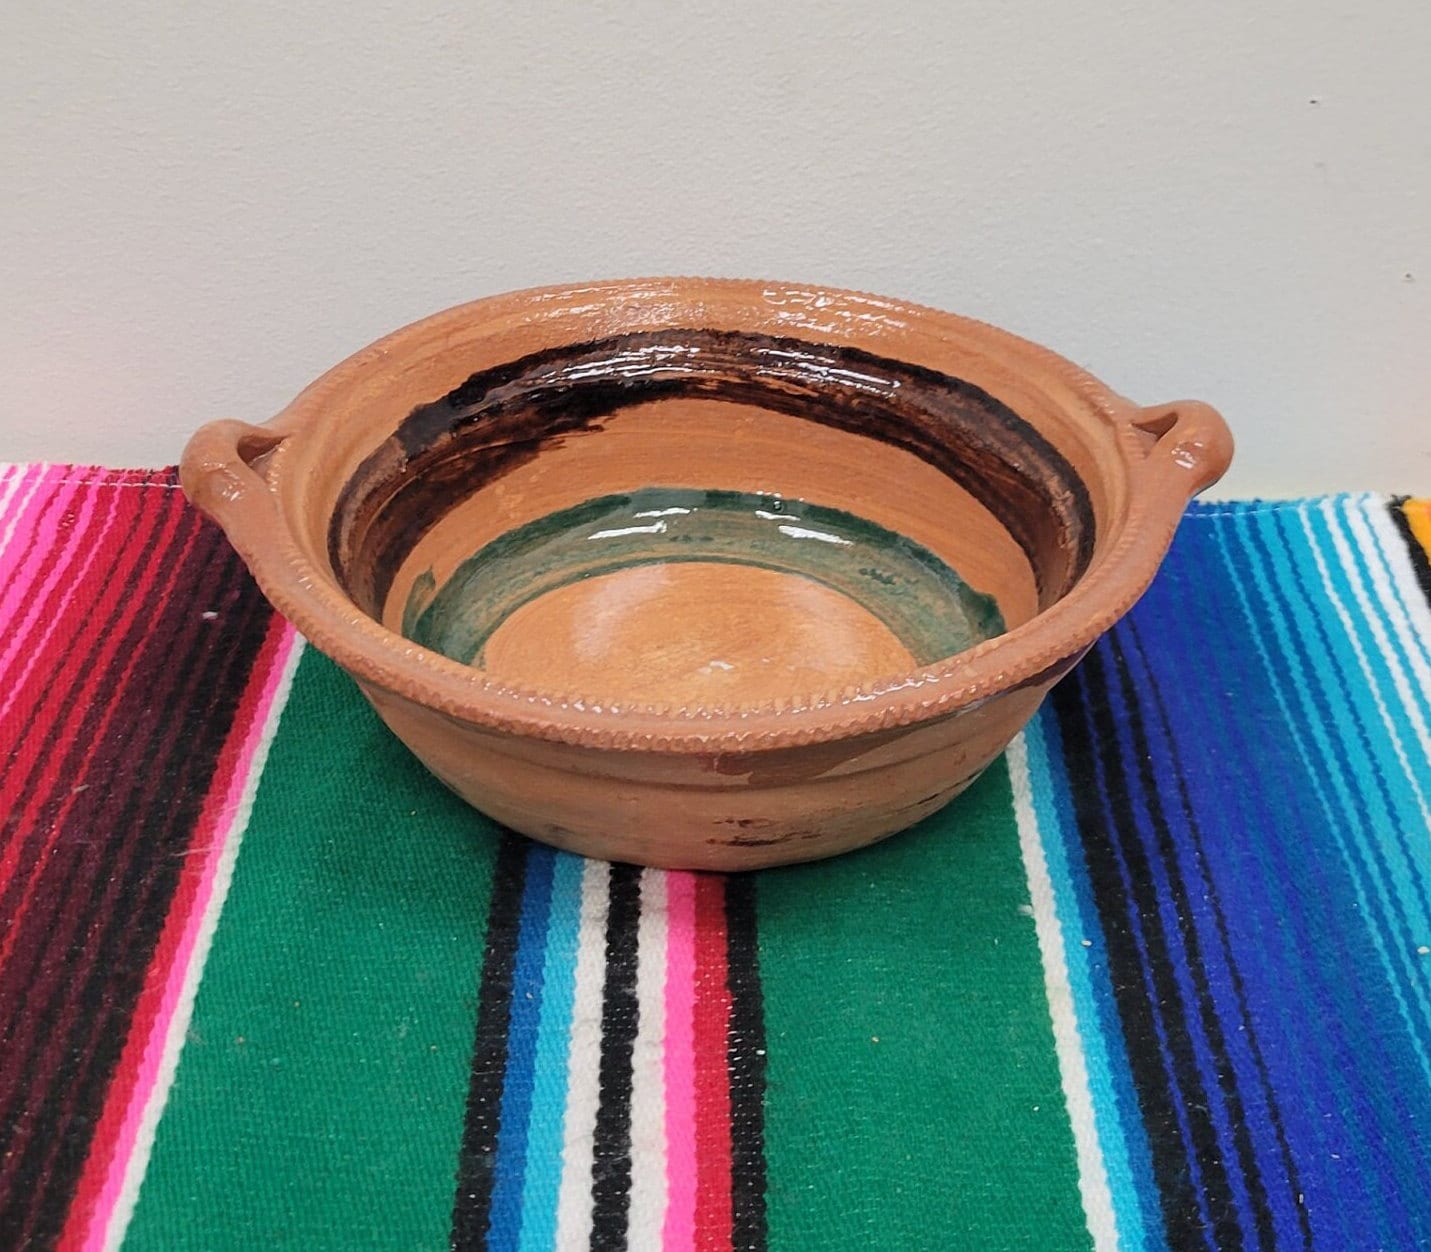 Grande Handmade Clay Pot Cazuela De Barro Terracota Pot Clay Pot 